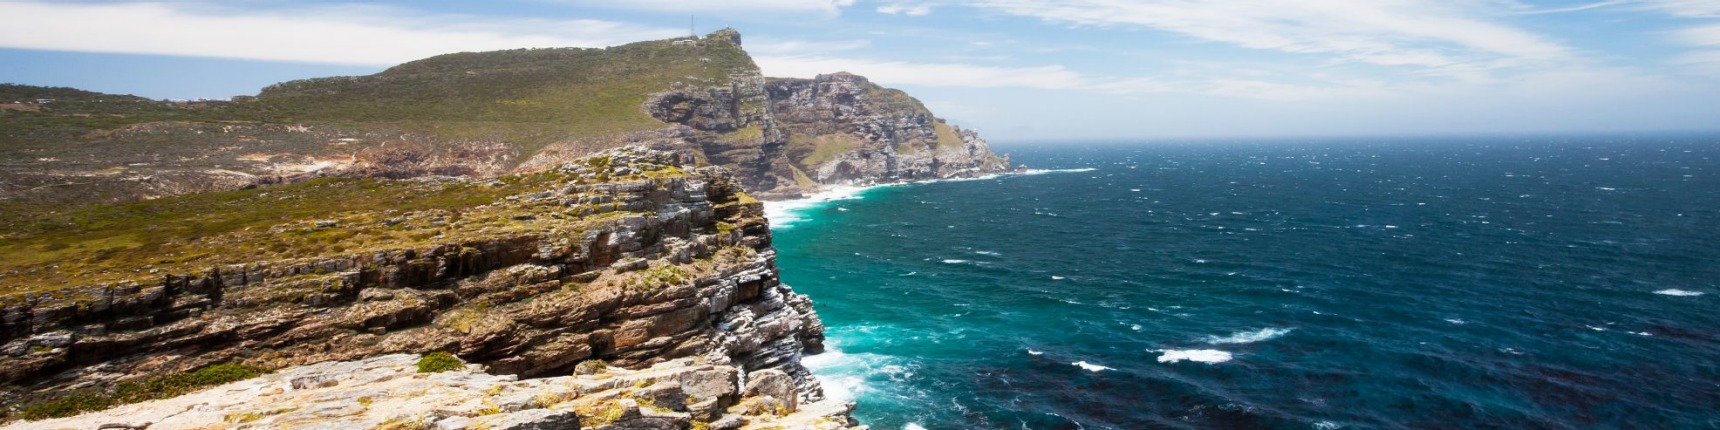 South Africa, coastline, cliff